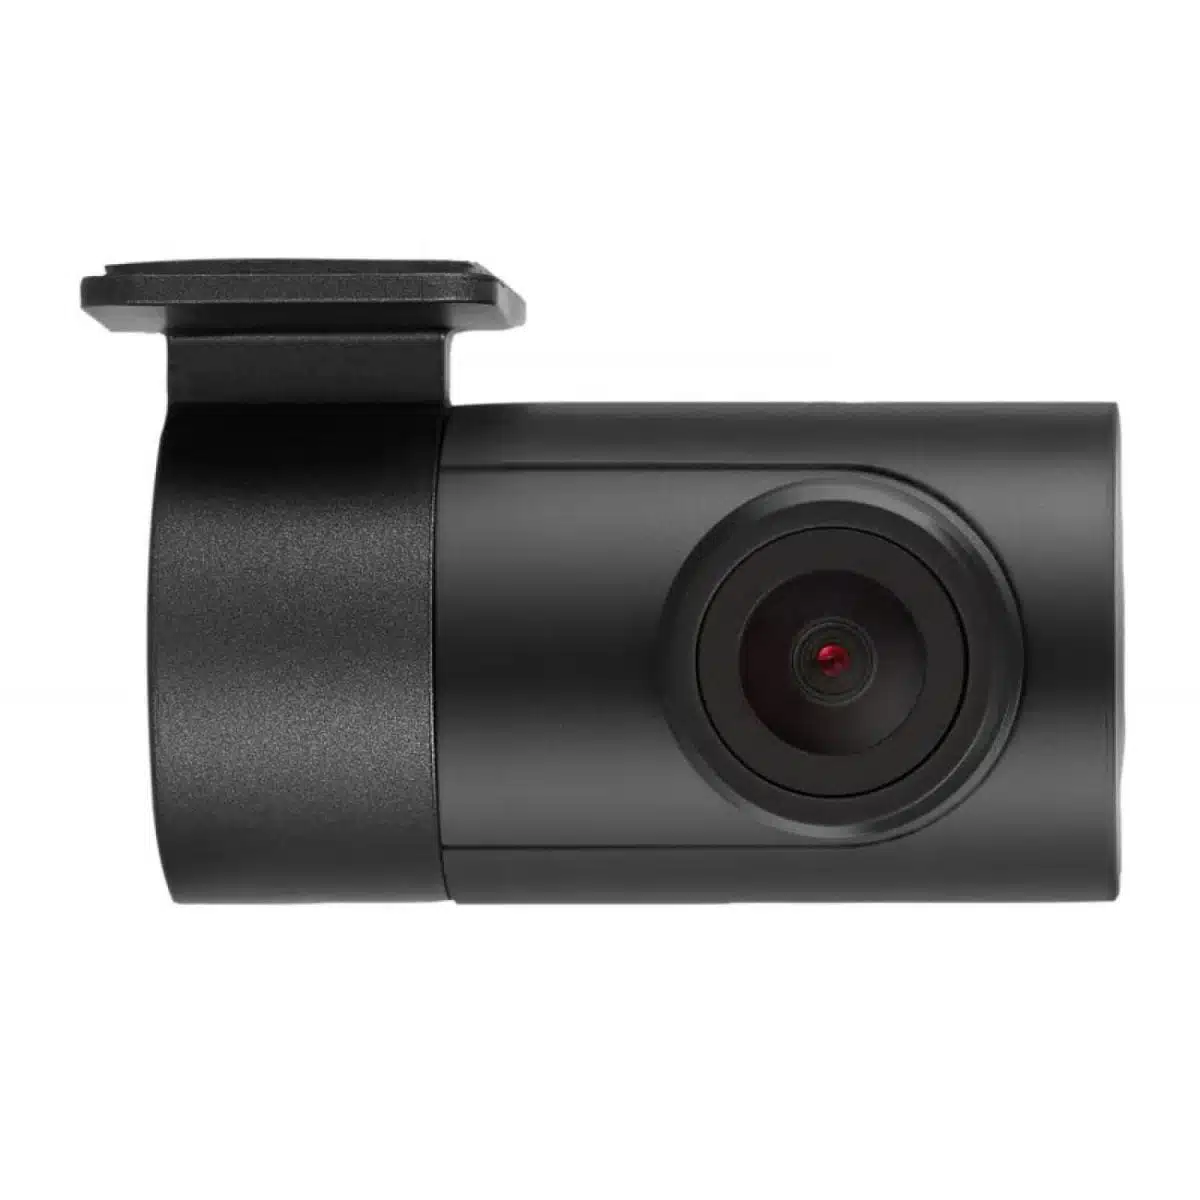 Beyaz zemin üzerine siyah 70Mai A800s-1 4K Araç İçi Kamera + RC06 Arka Kamera Seti.